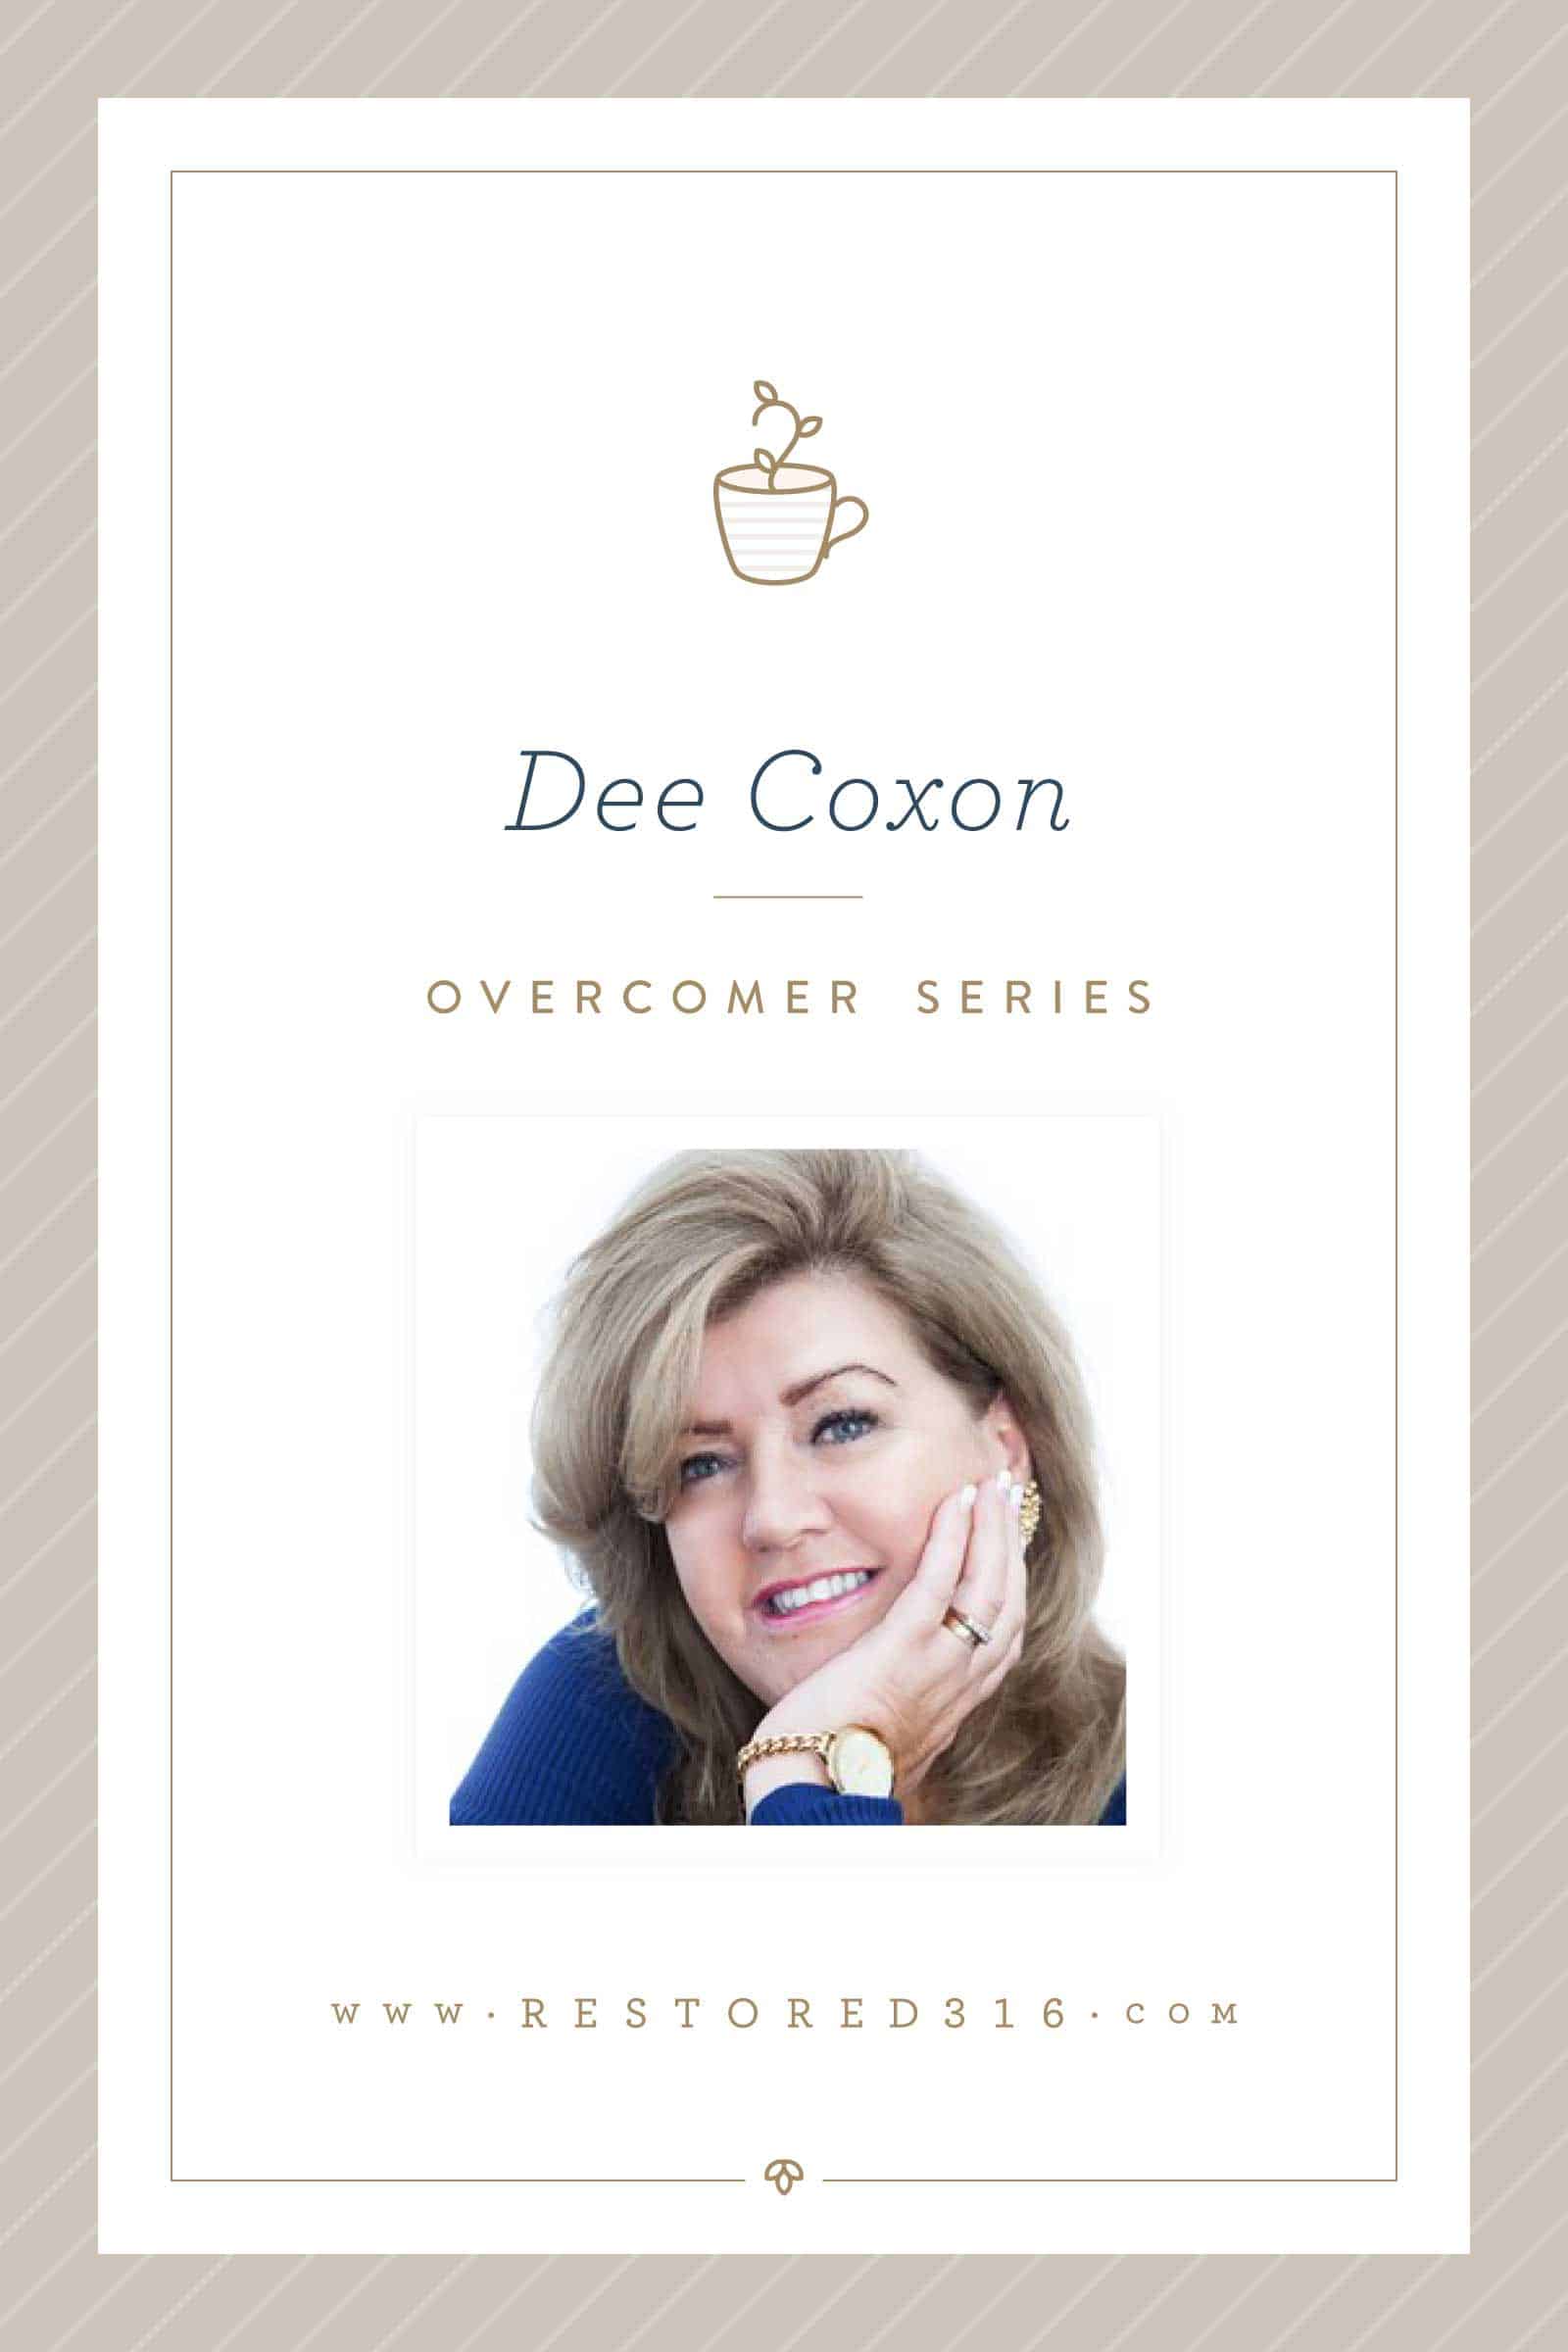 Overcomer Series with Dee Coxon